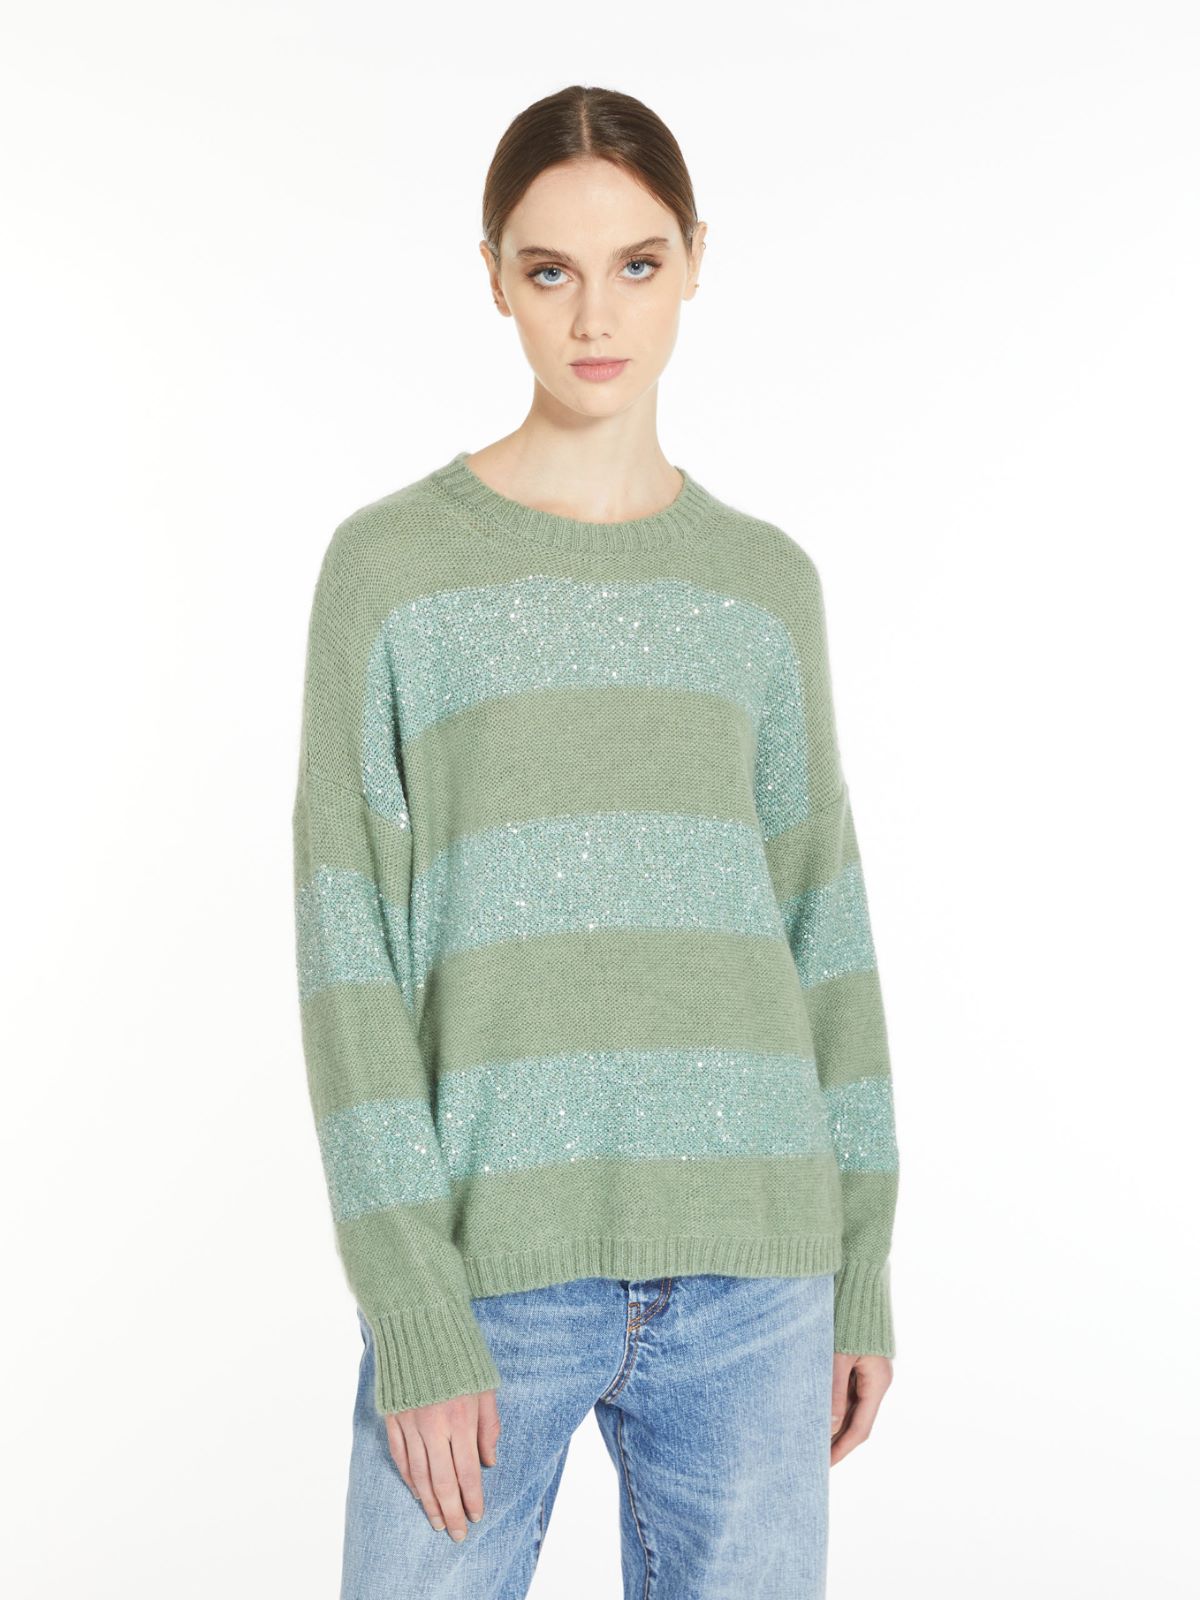 Sequin sweater - SAGE GREEN - Weekend Max Mara - 4